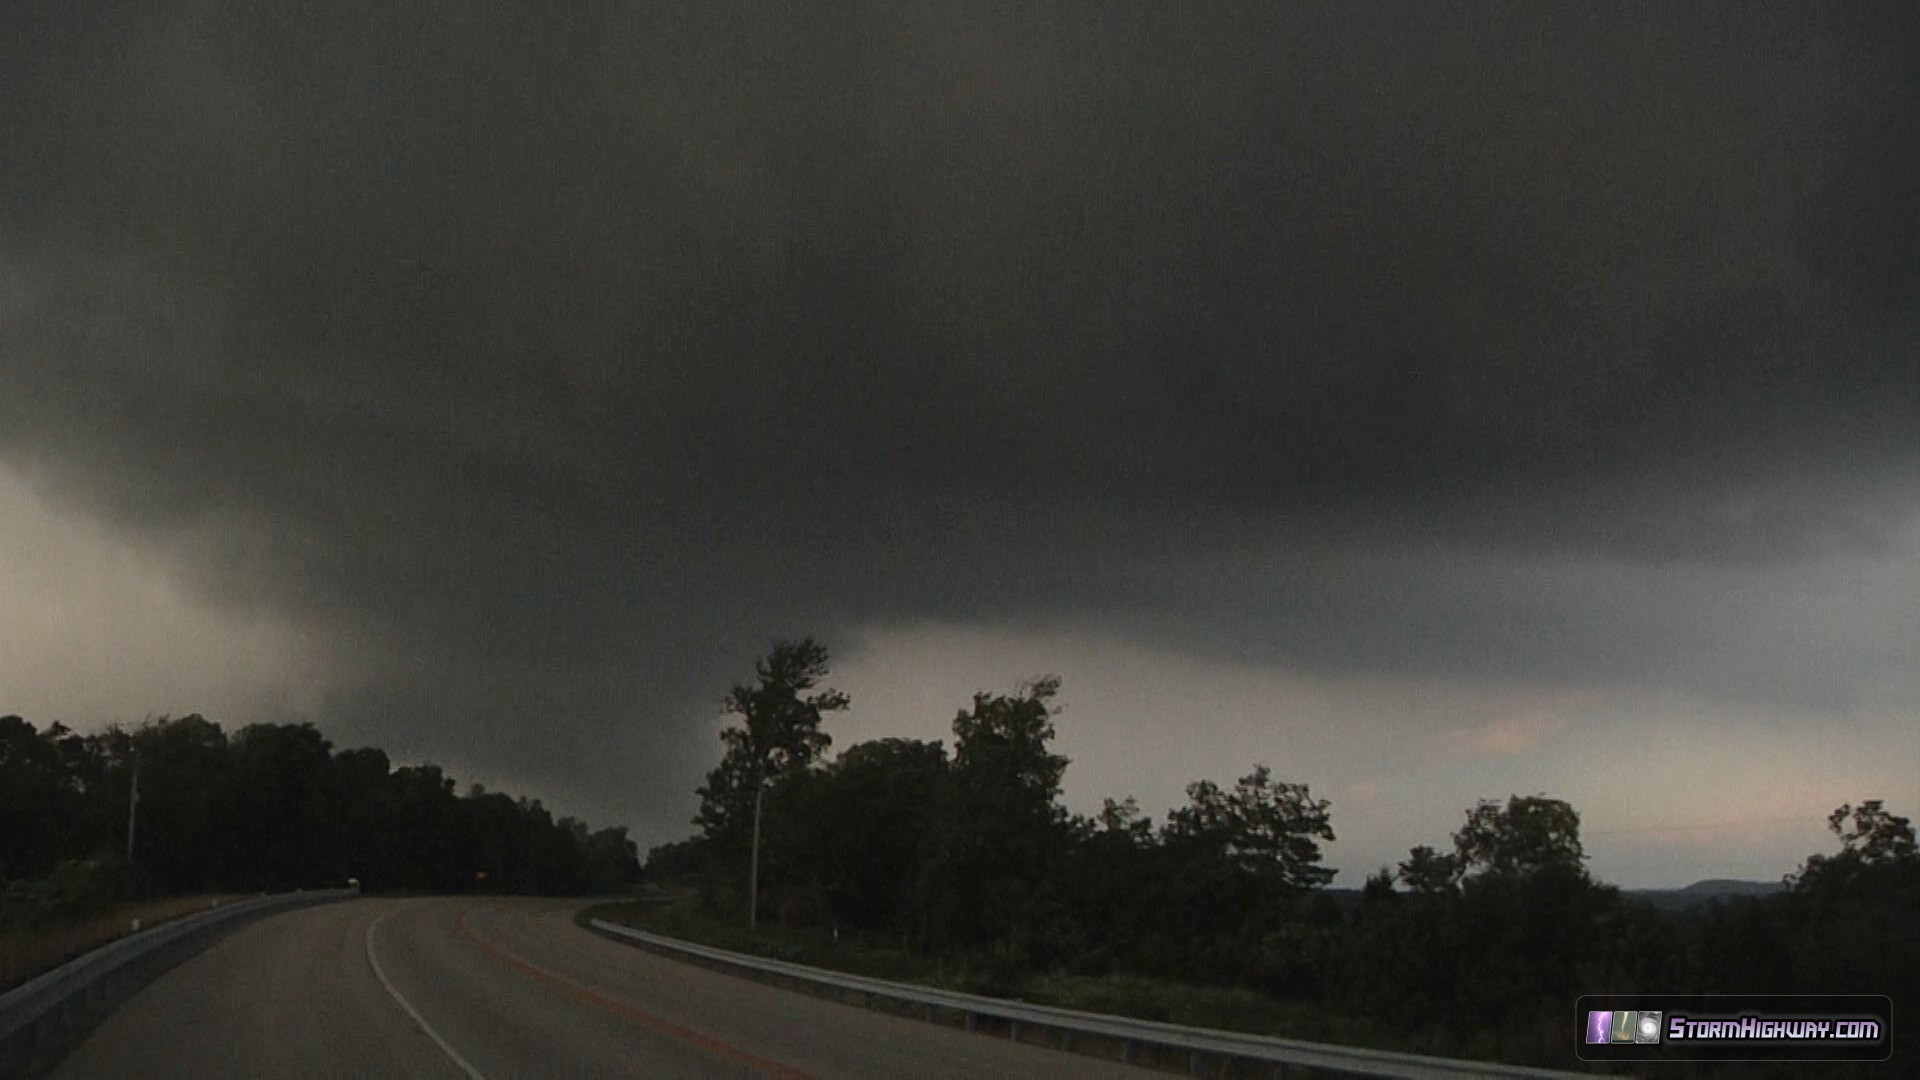 Supercell near Flemingsburg, Kentucky - July 27, 2014